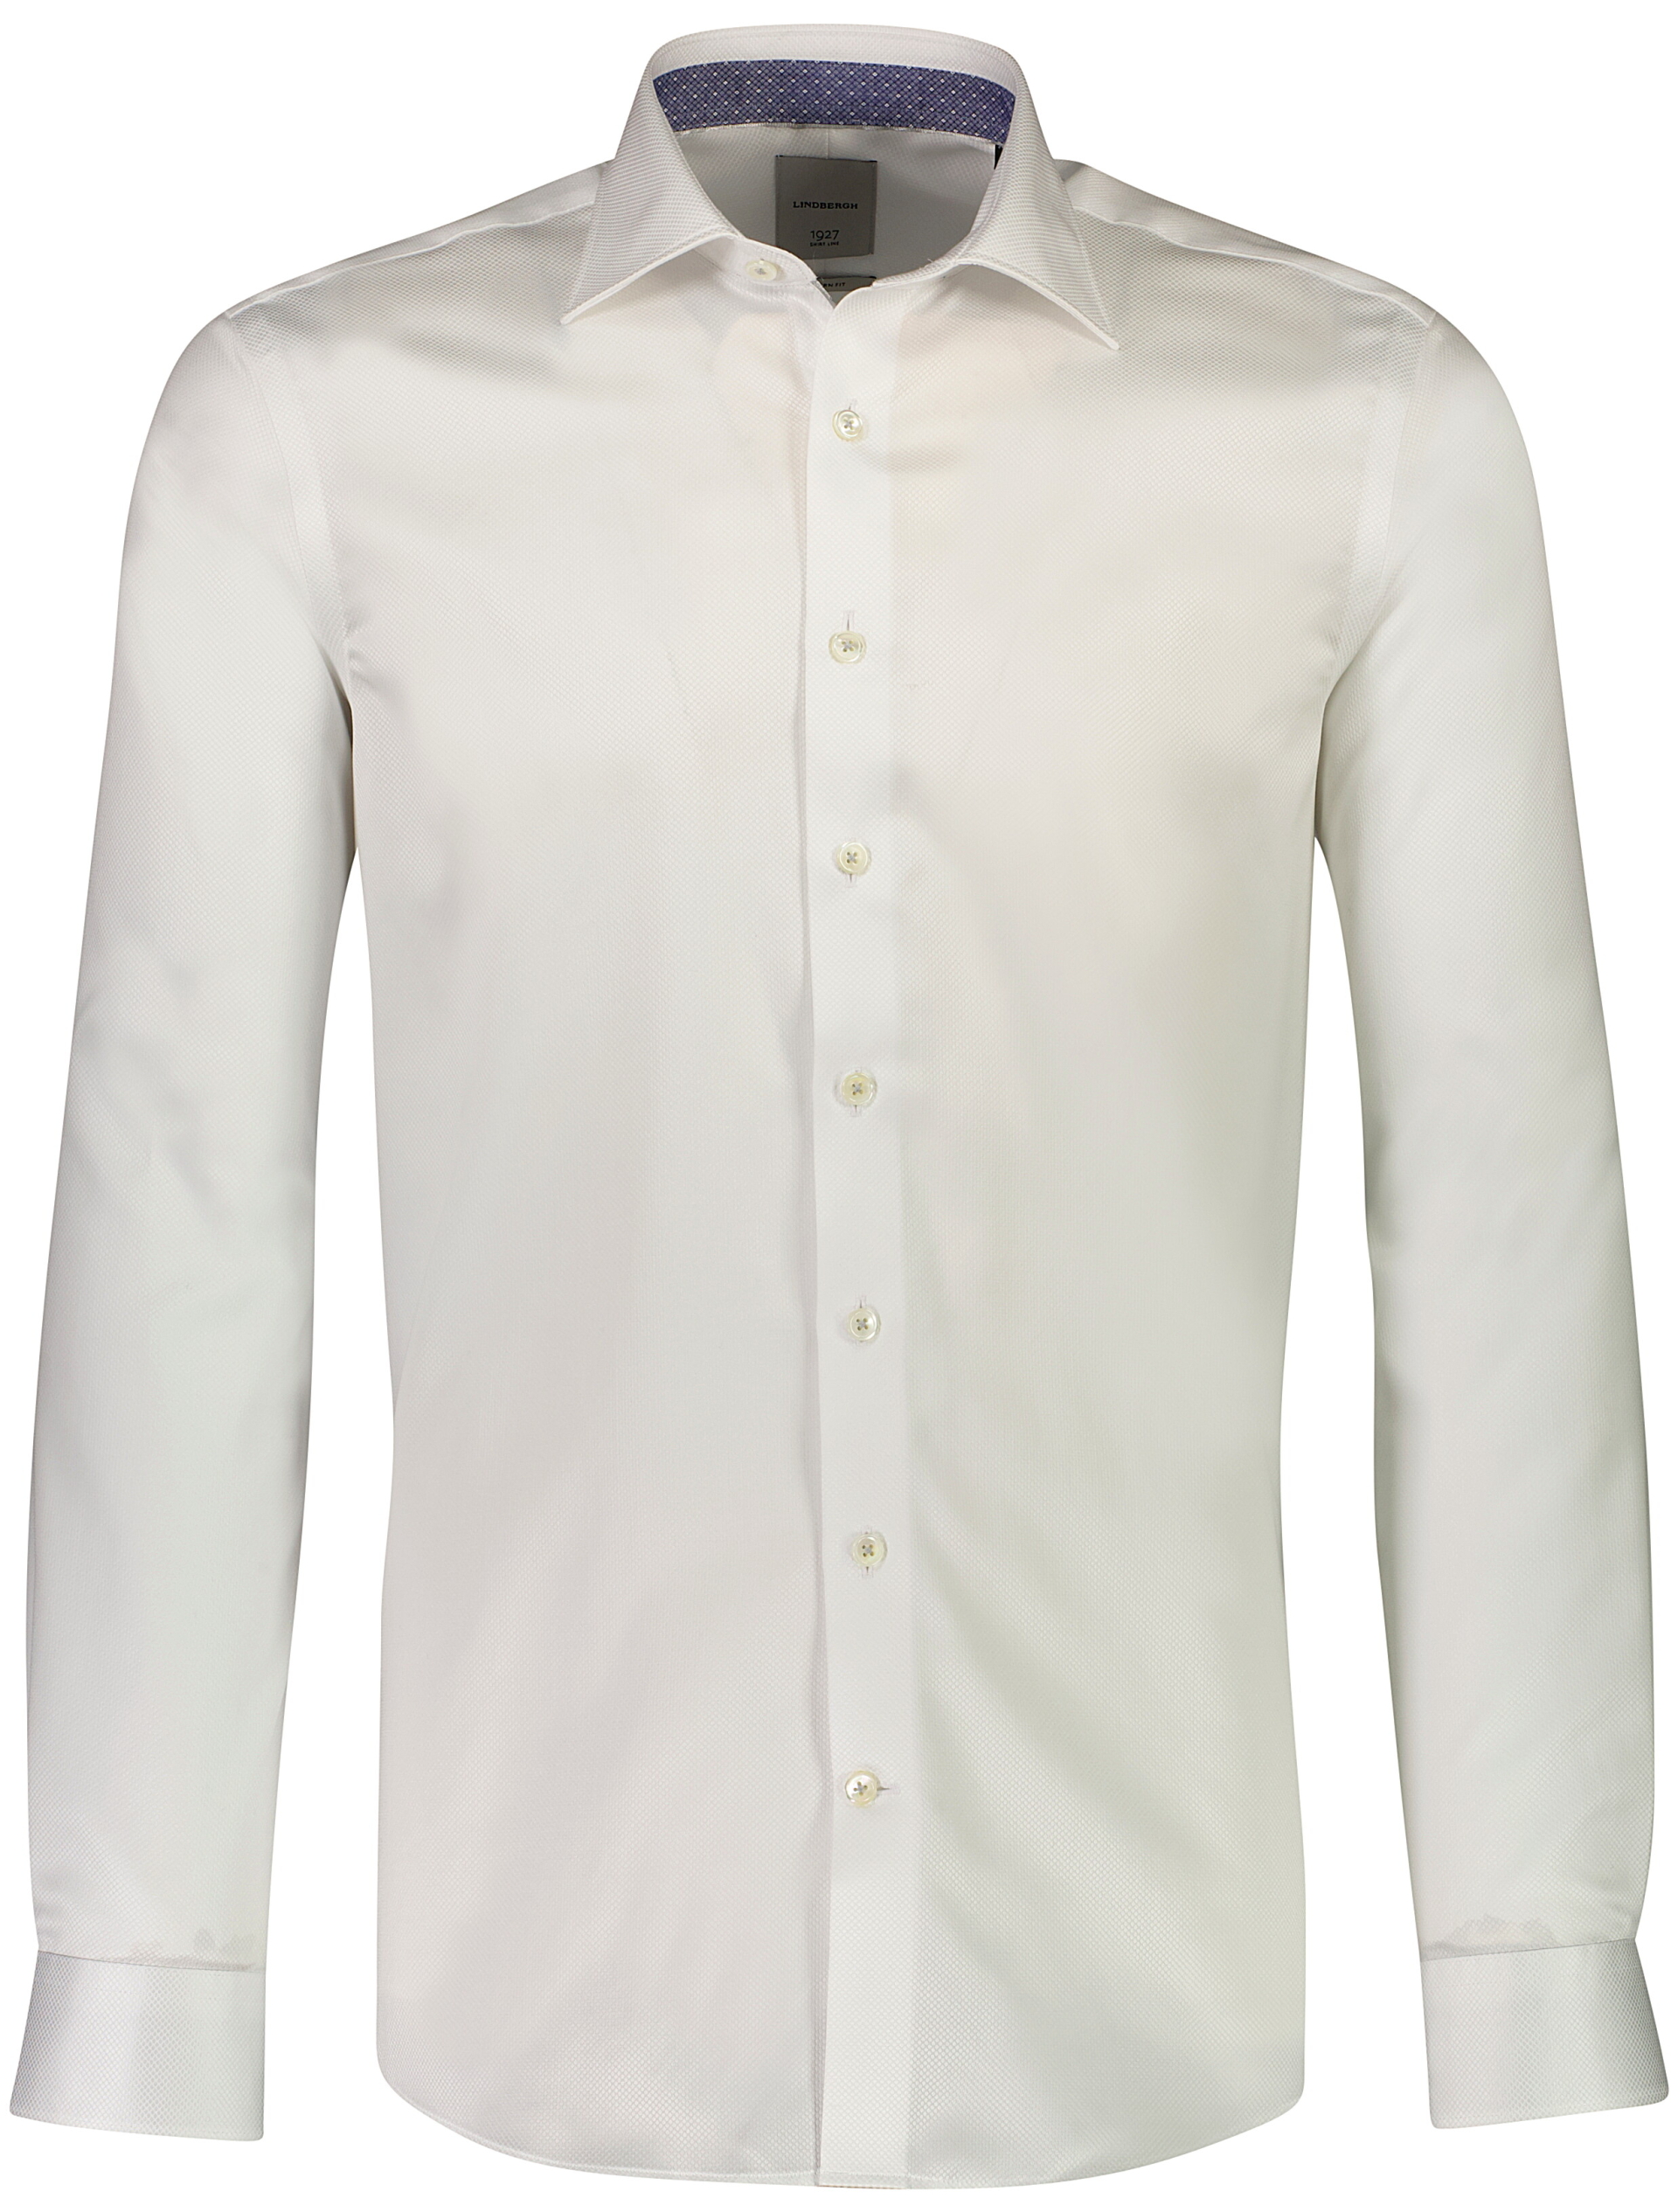 Lindbergh Business skjorta vit / white